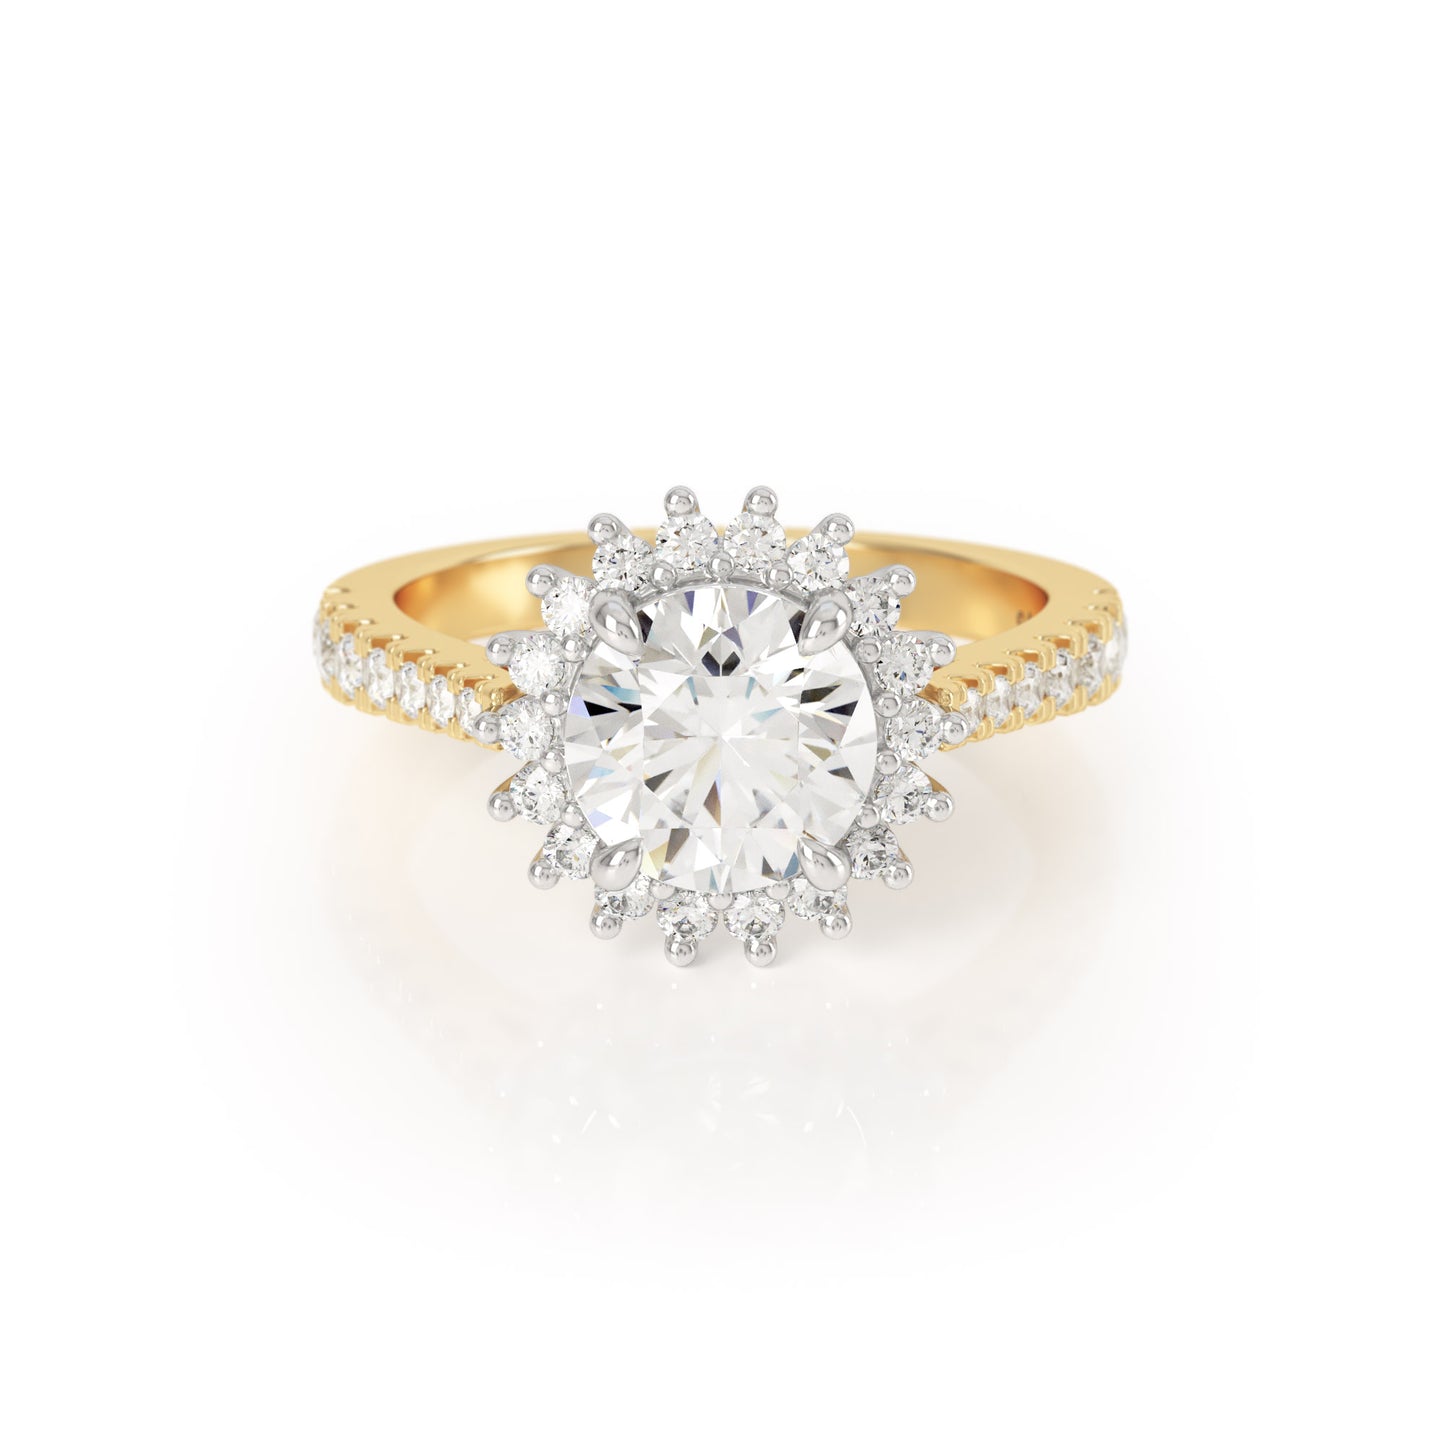 Asteri Diamond Halo Ring in 18k Yellow Gold and Platinum with 1.5ct centre round brilliant - Avila Vara